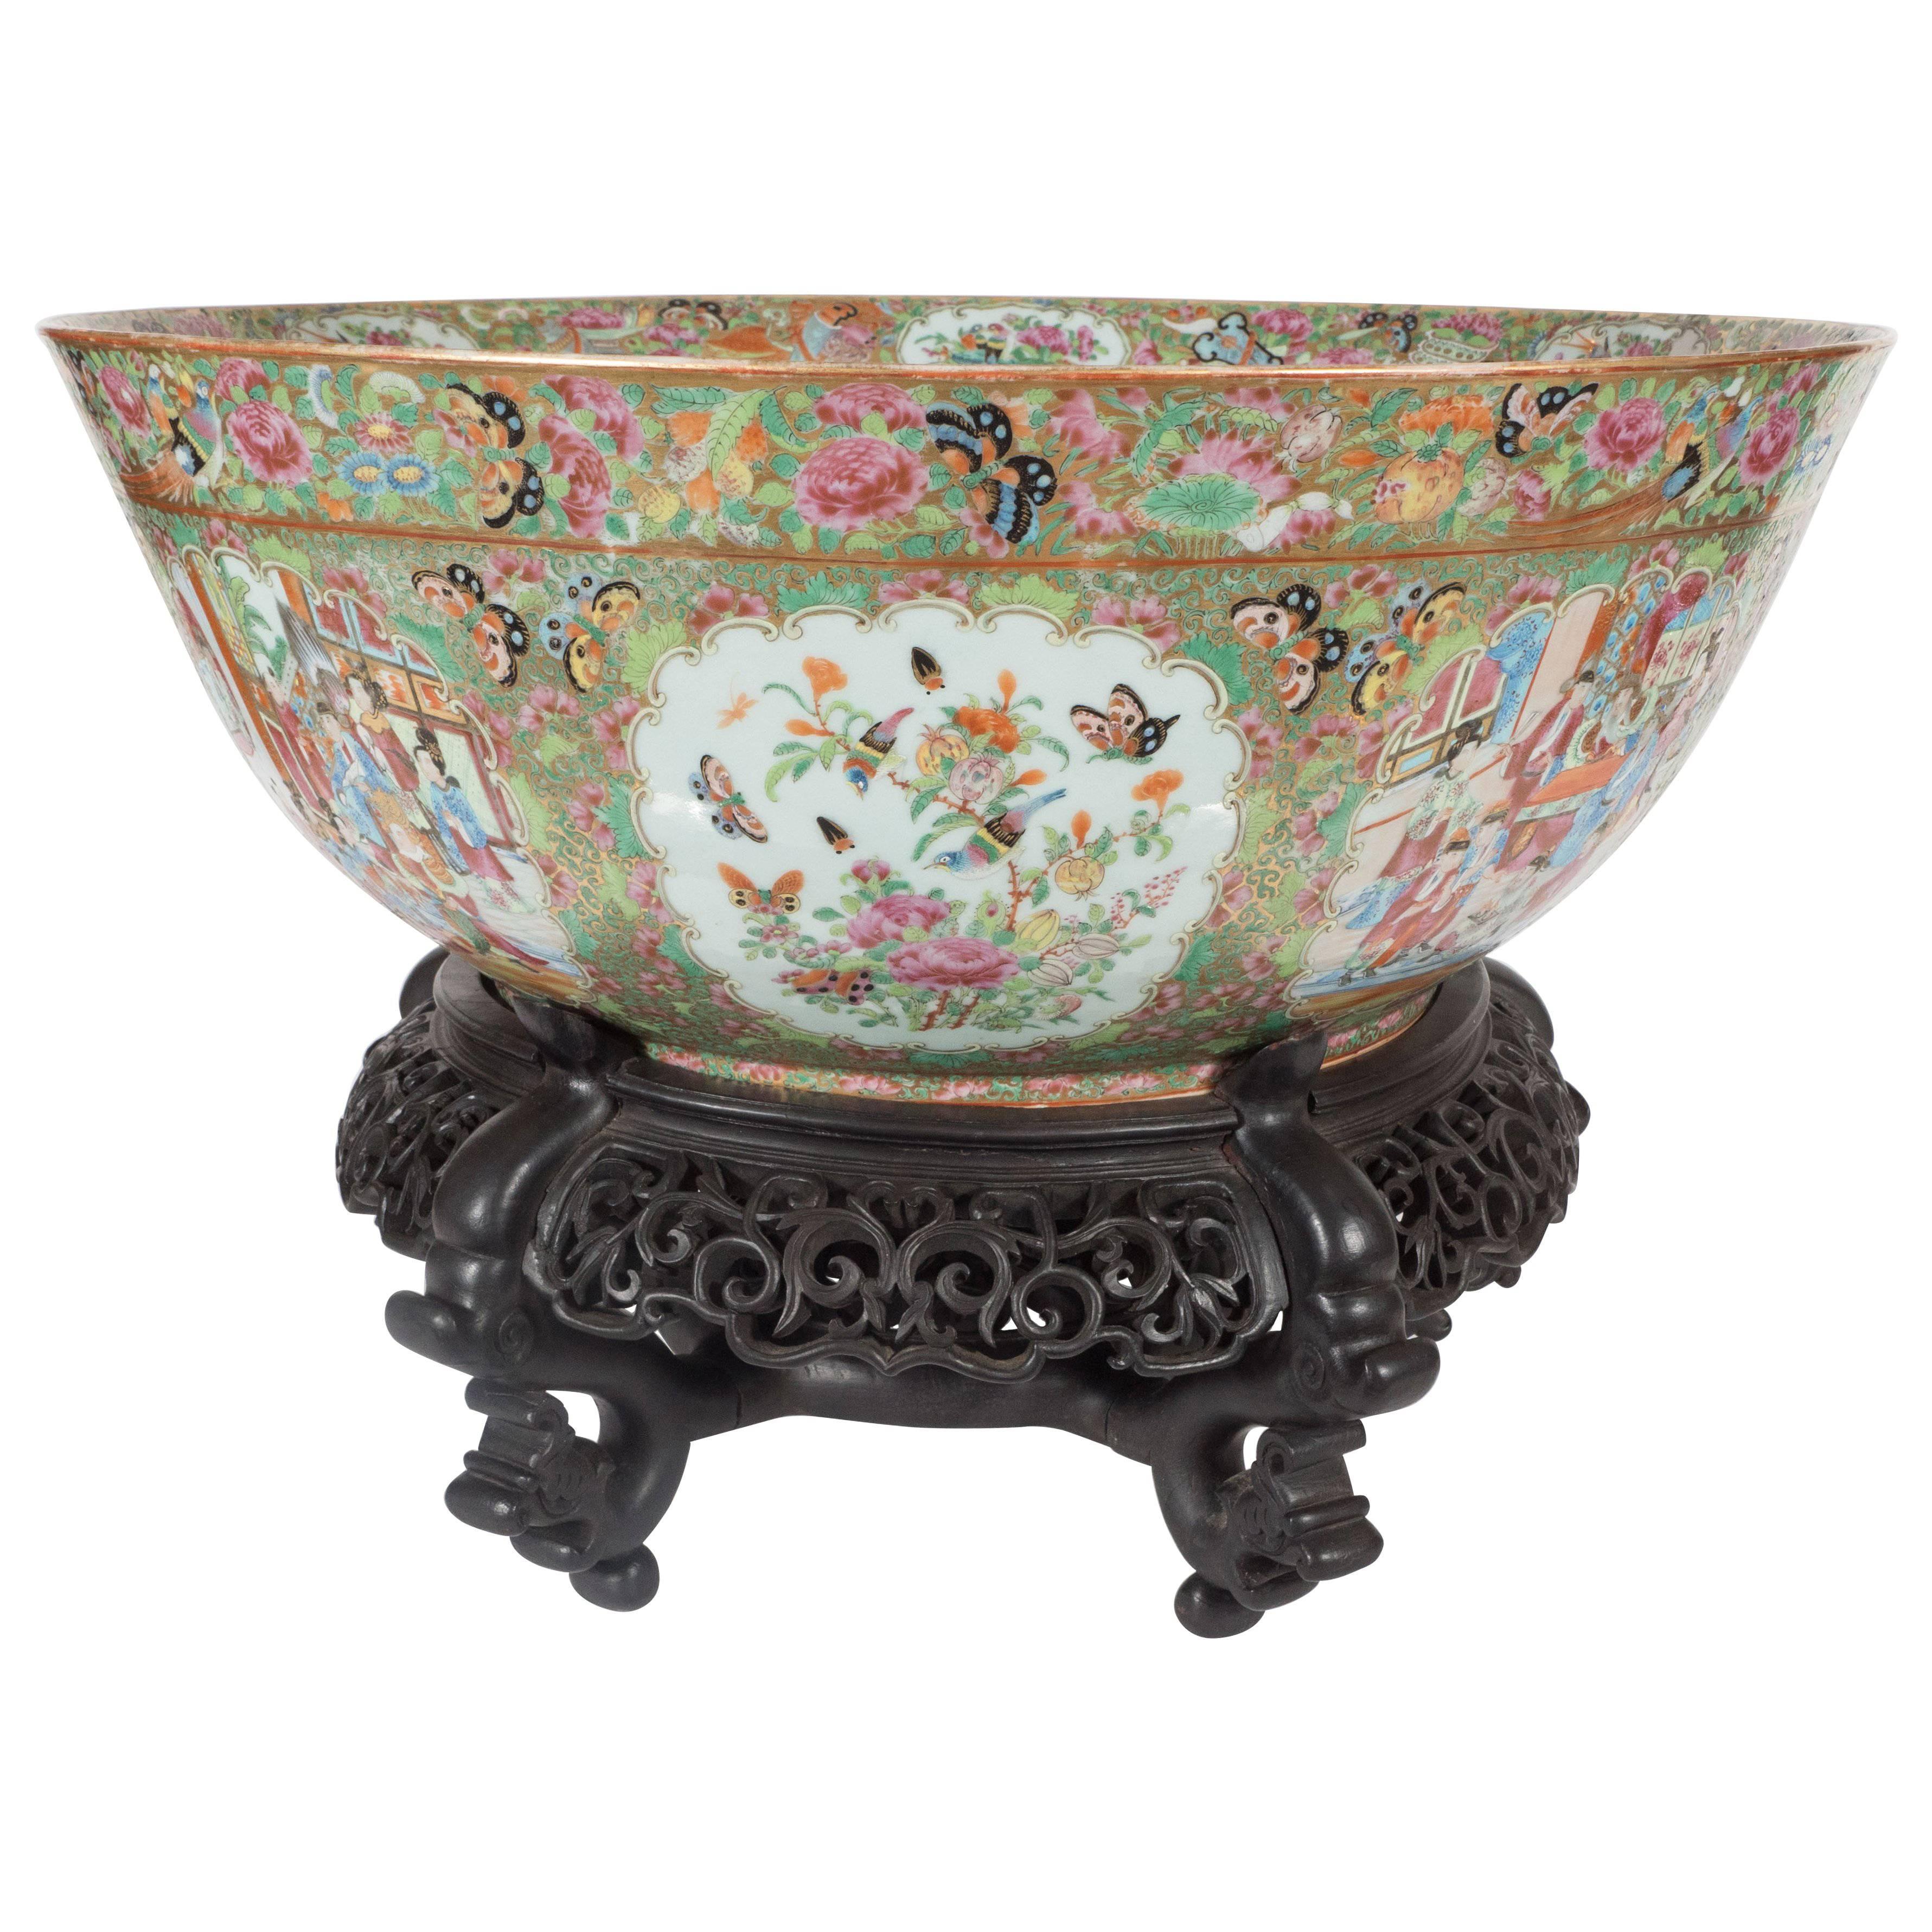 Important "Mandarin" Style Rose Medallion Chinese Export Ceramic Bowl